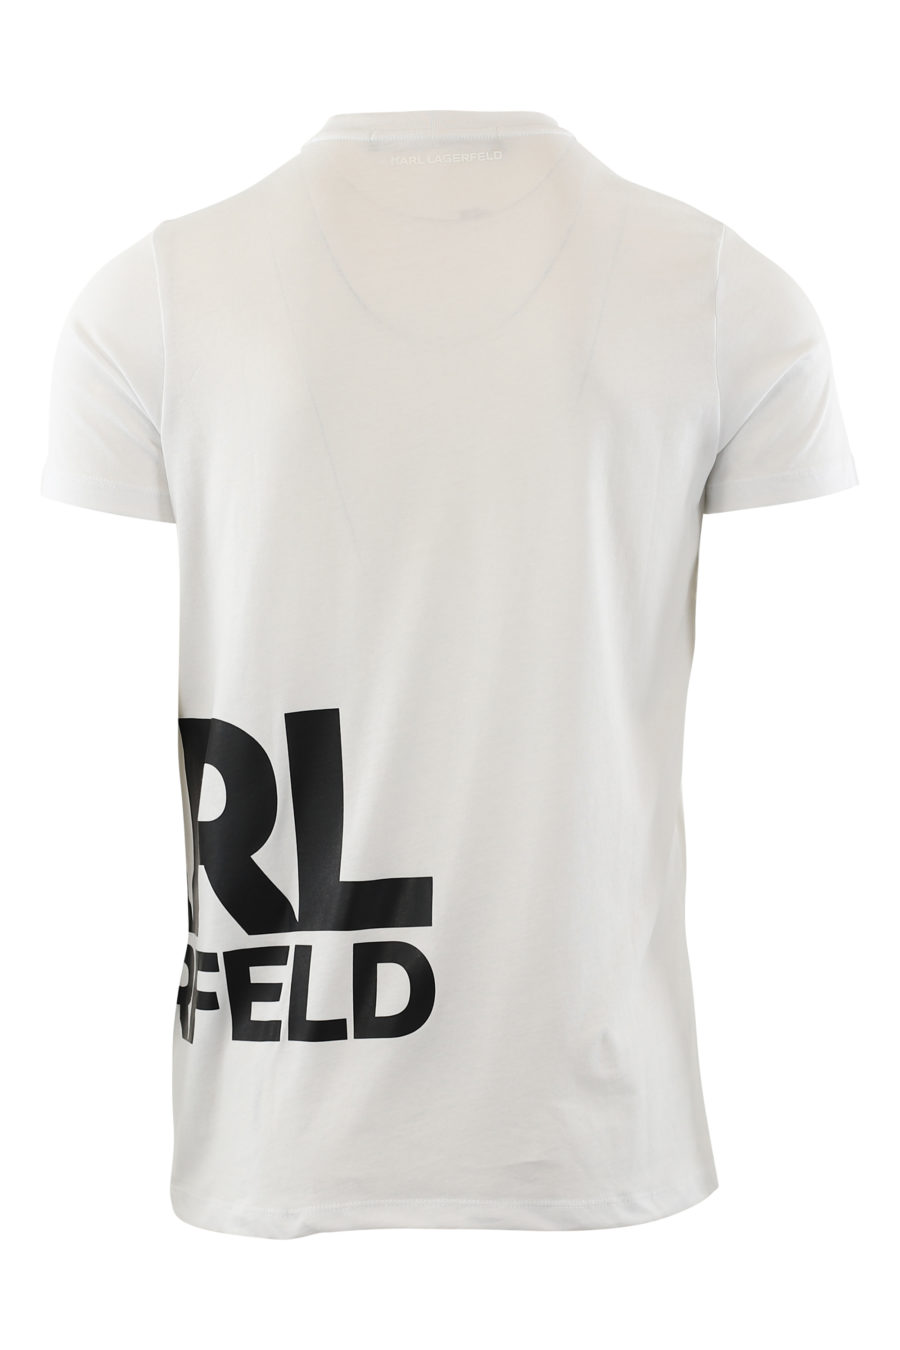 Camiseta blanca con logo negro grande lateral - IMG 6516